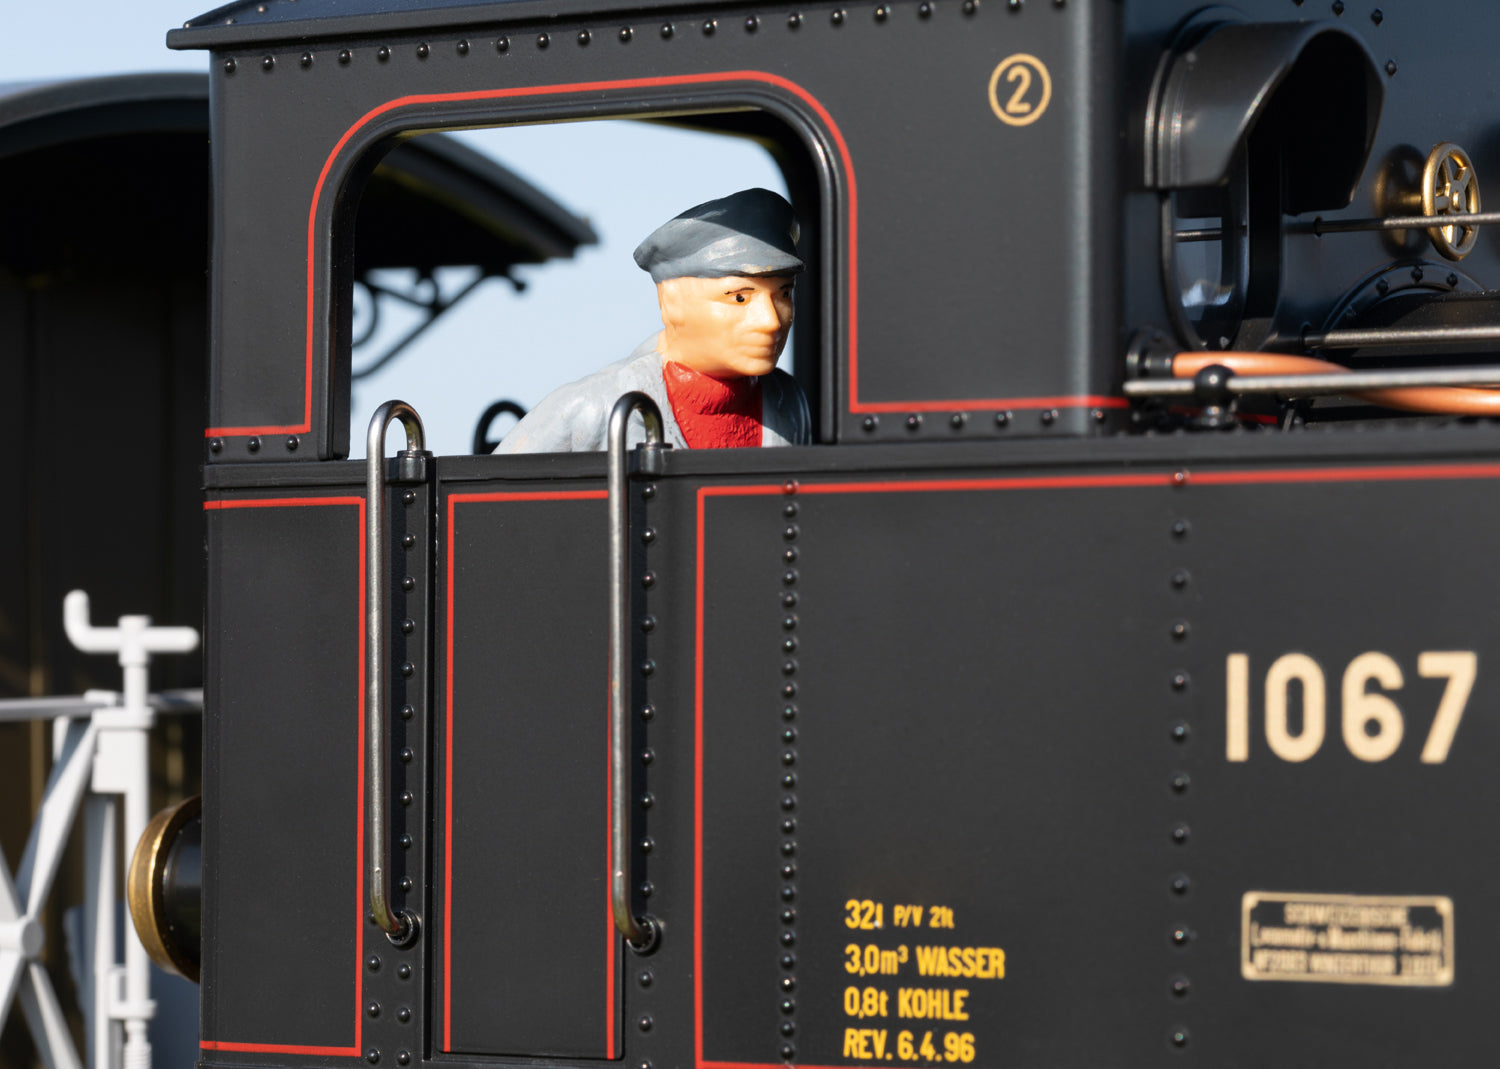 LGB 20275 - Ballenberg Steam Railroad Class HG 3/3 Steam Locomotive at ajckids.com